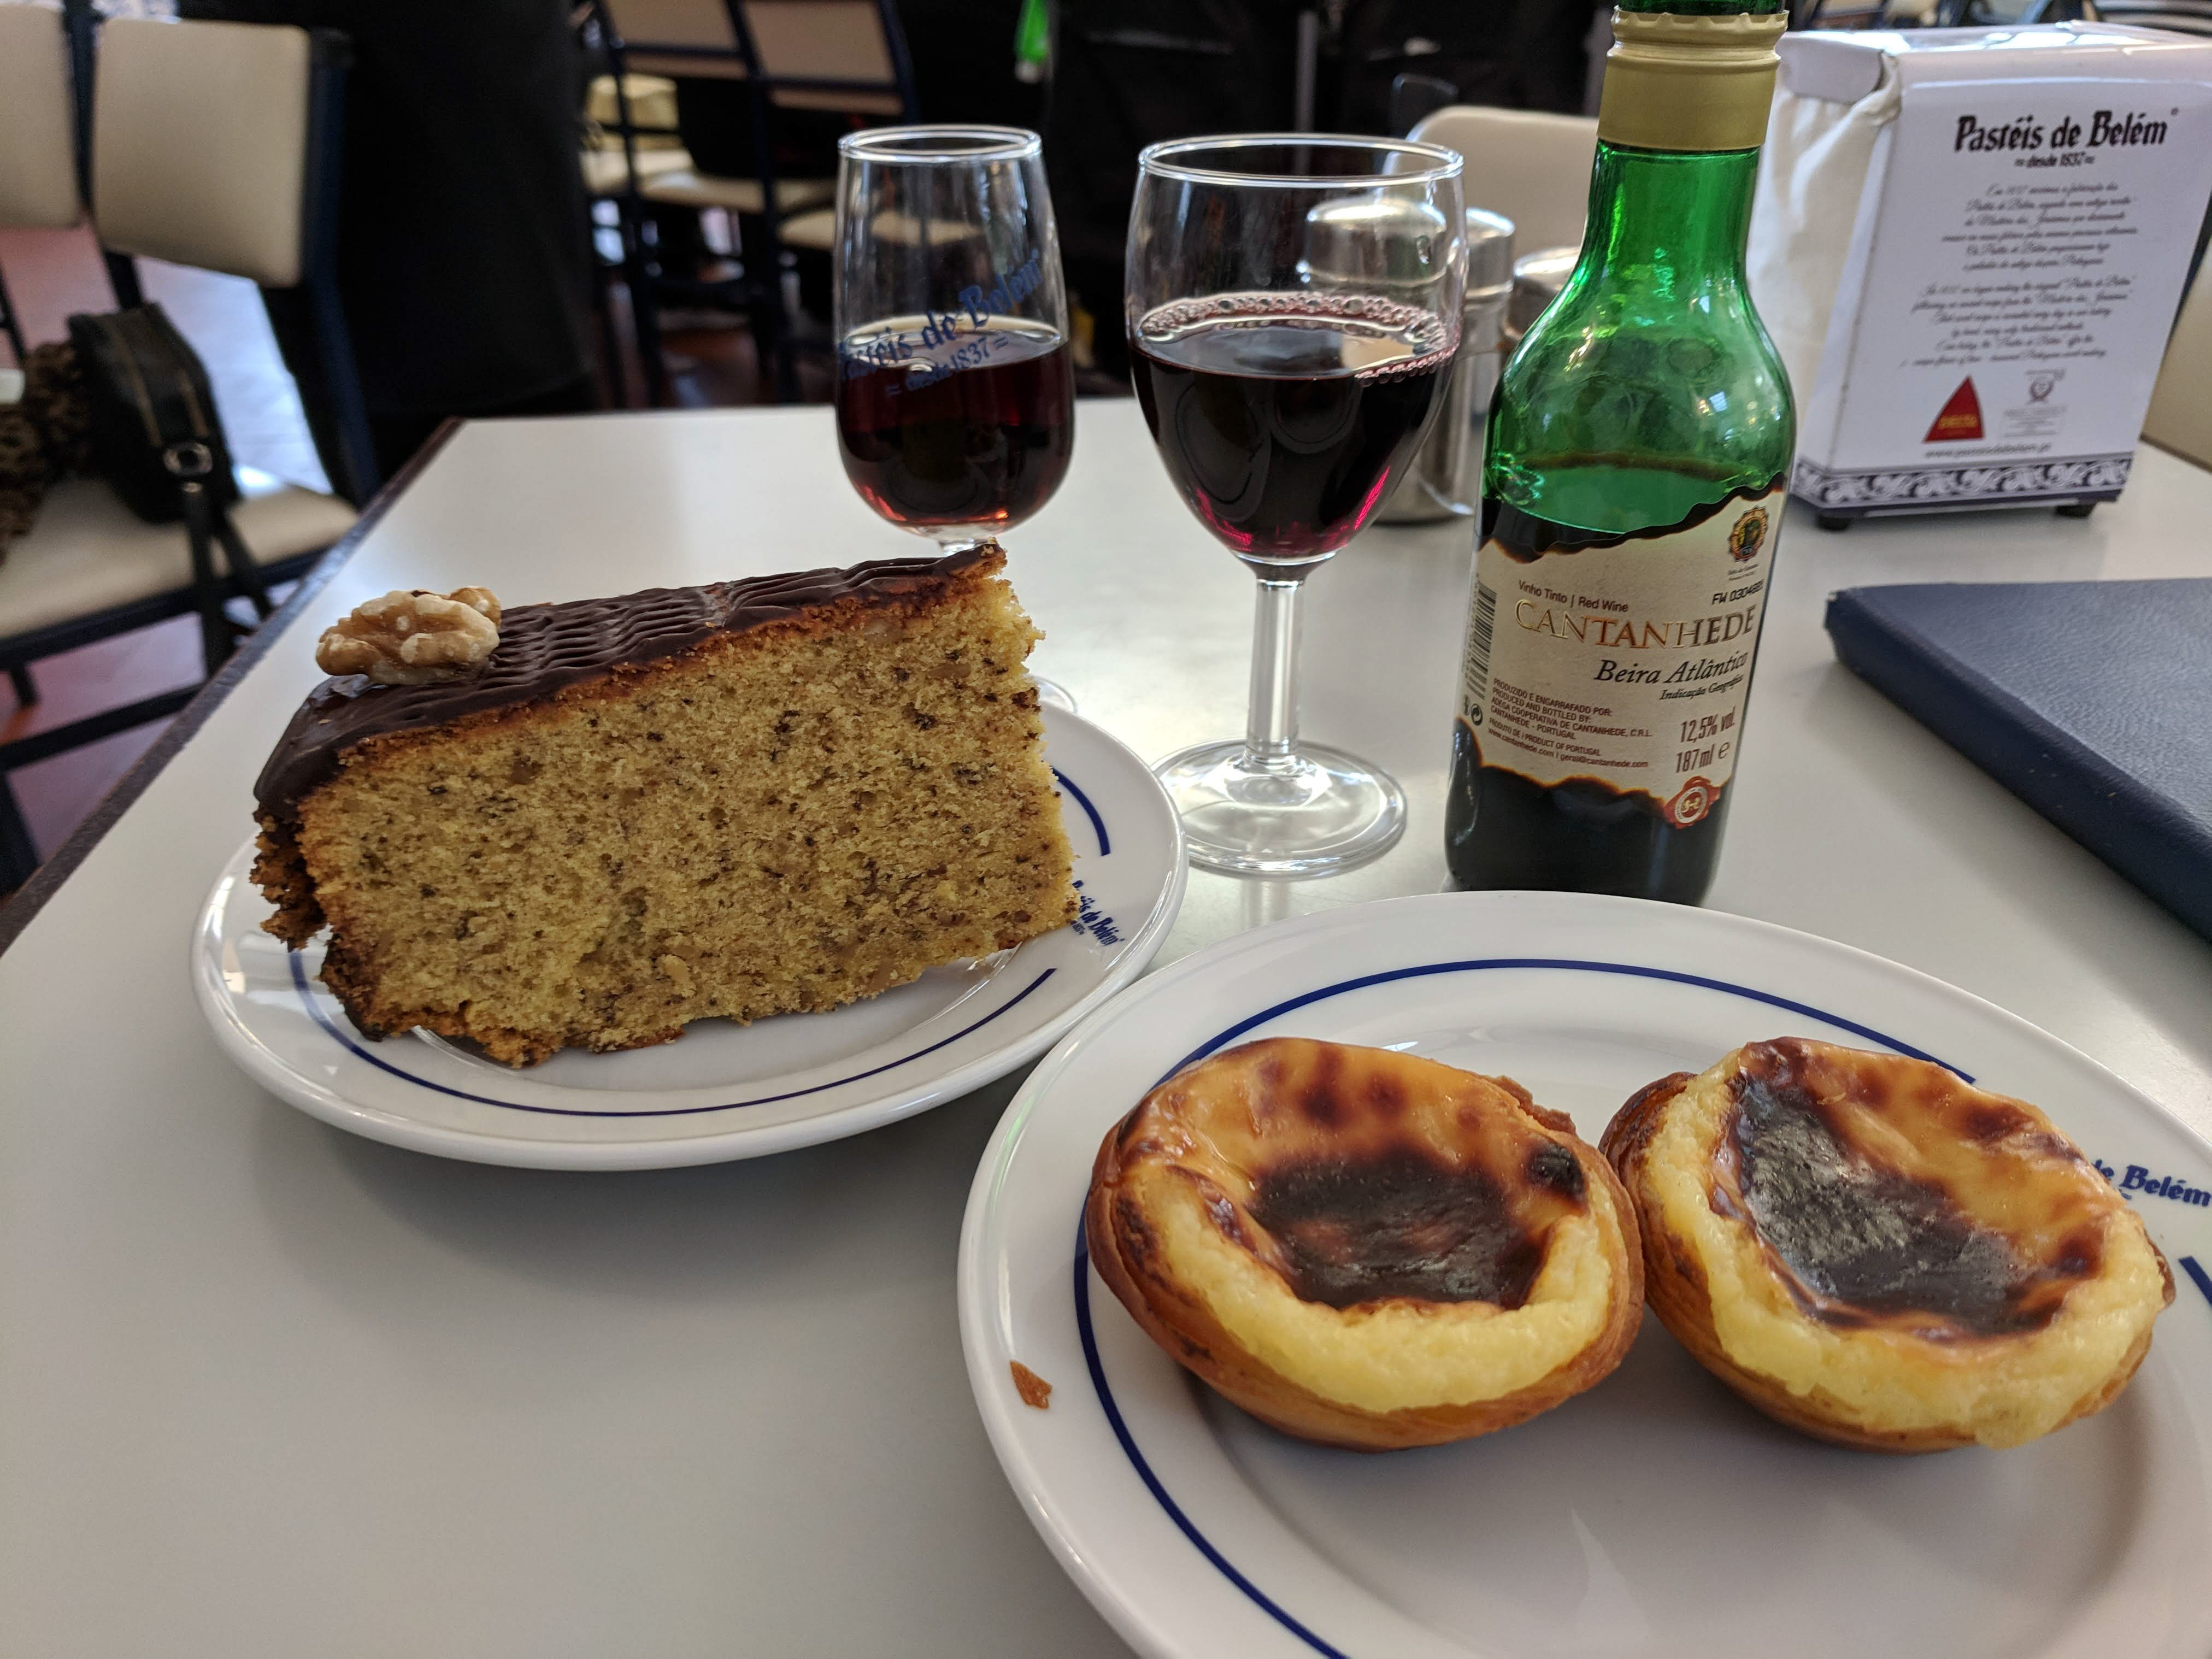 hazelnut cake and egg tarts @ Pastéis de Belém